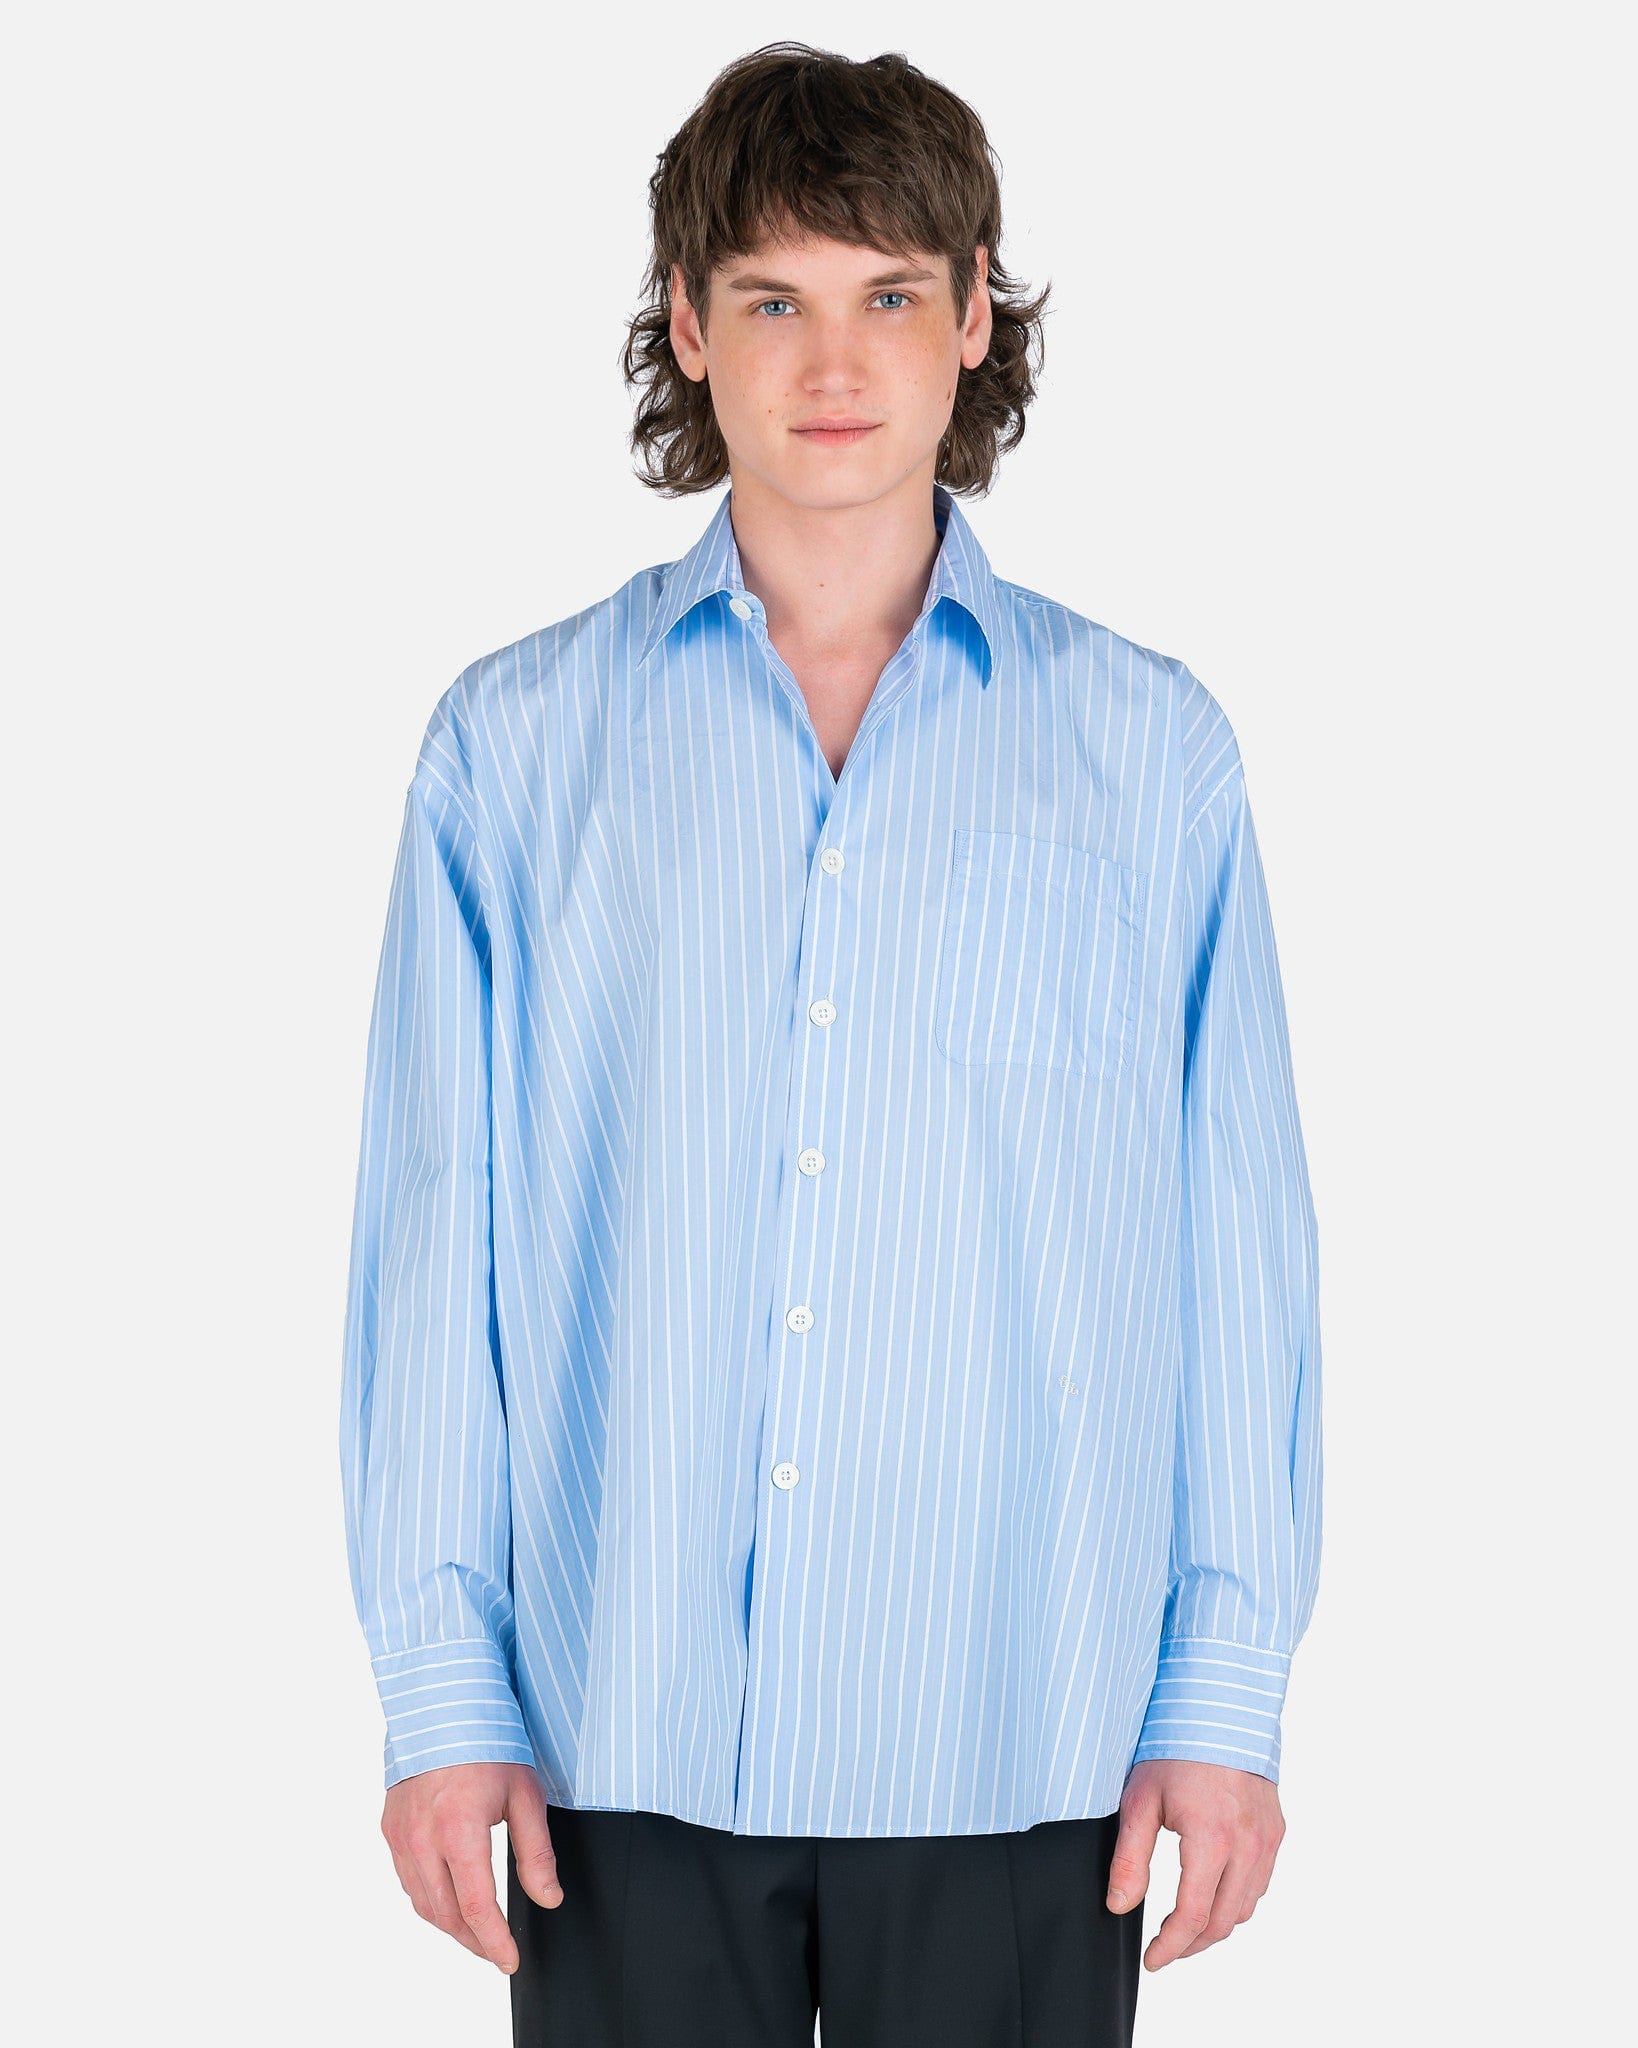 Borrowed Shirt in Blue/Rose Olden Stripe